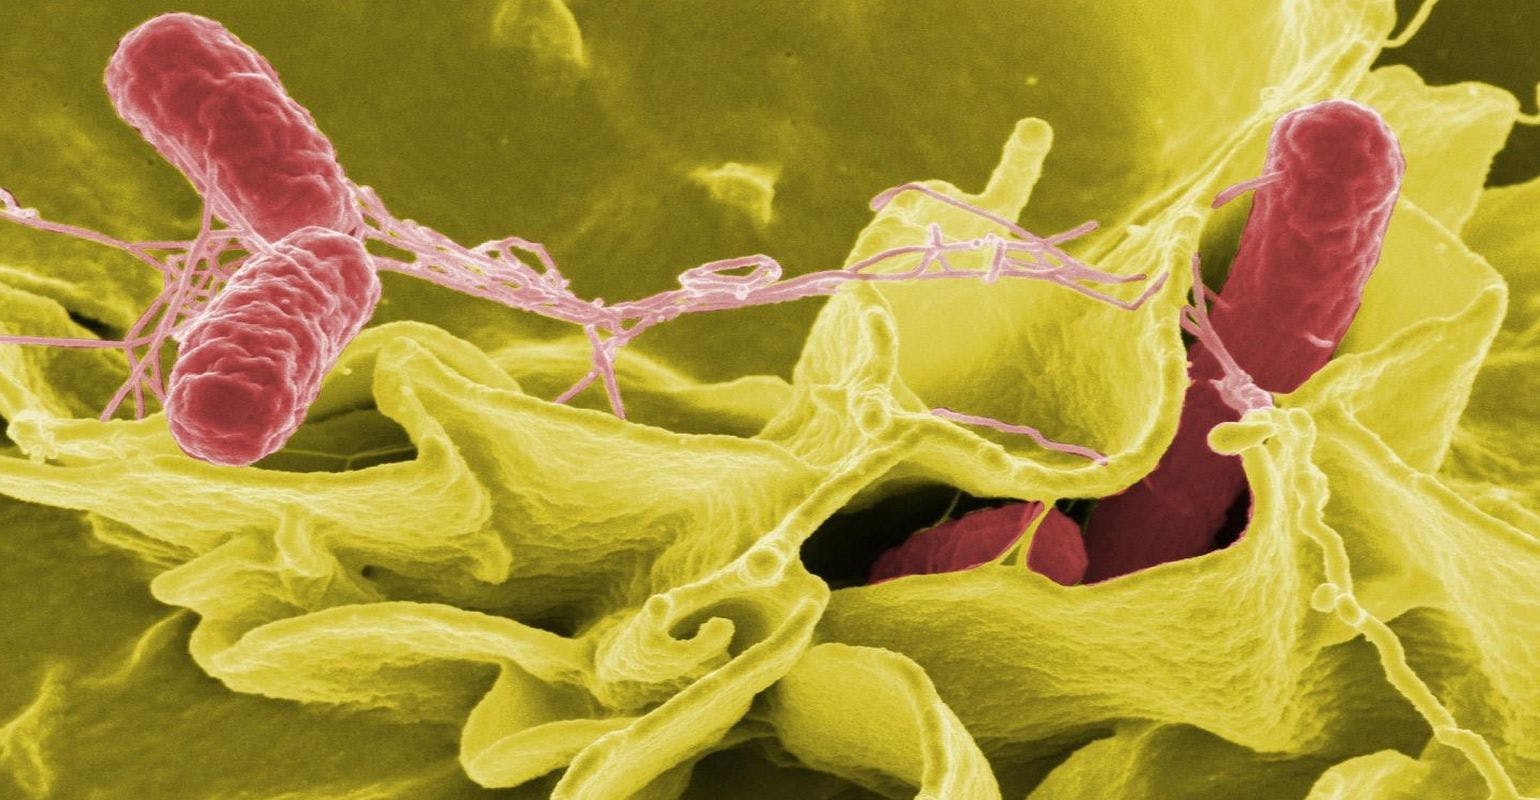 Researchers Develop Method to Predict Salmonella Outbreaks